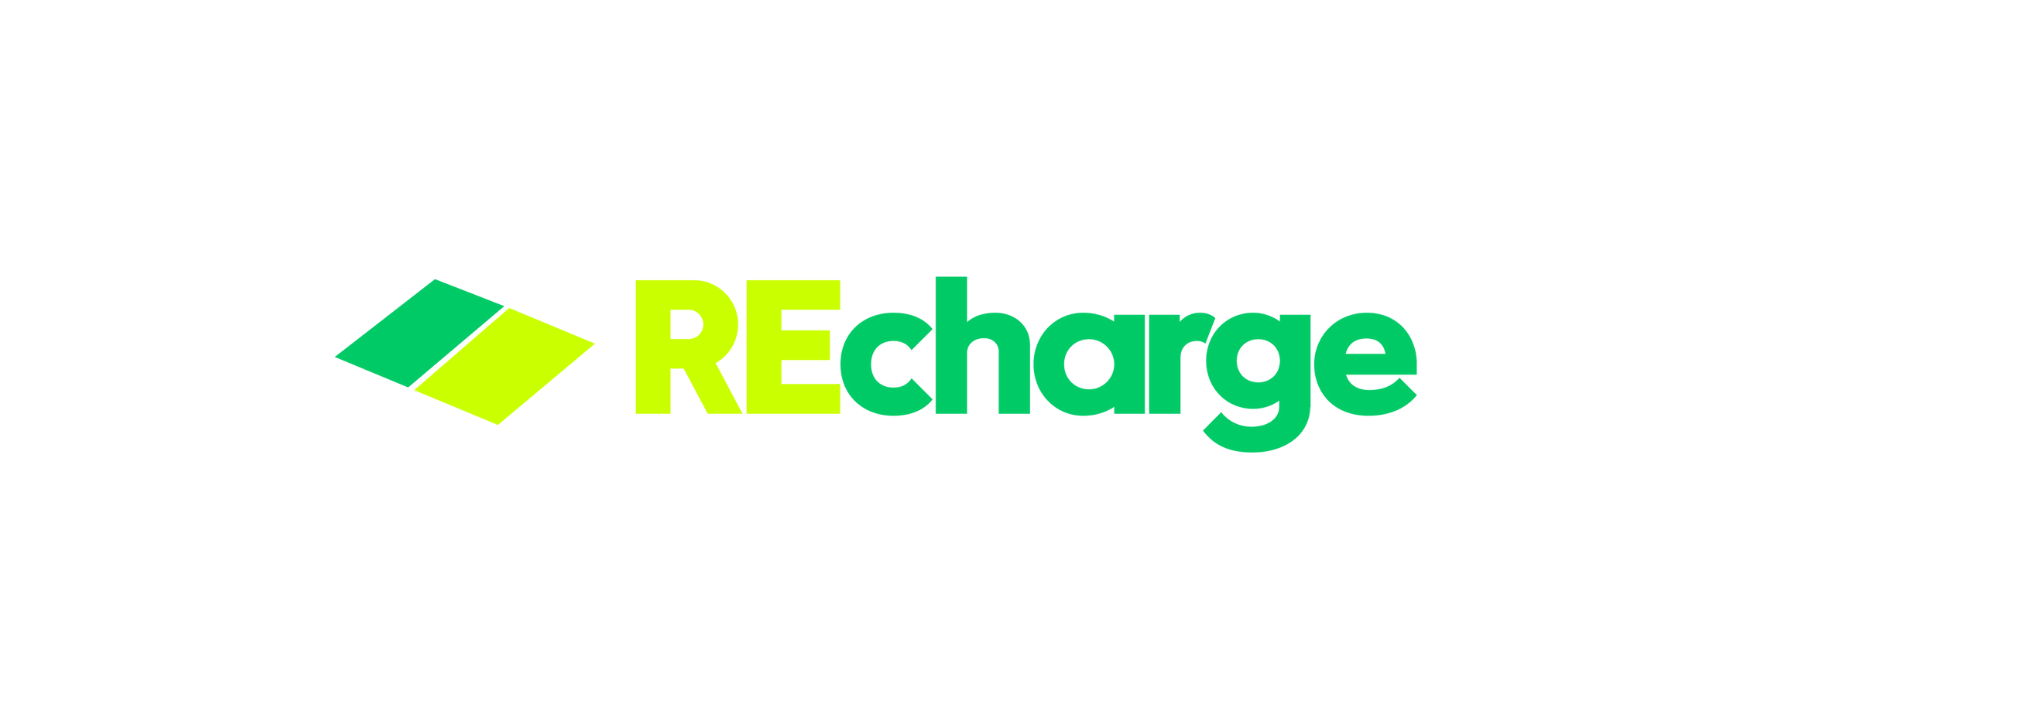 recharge 2